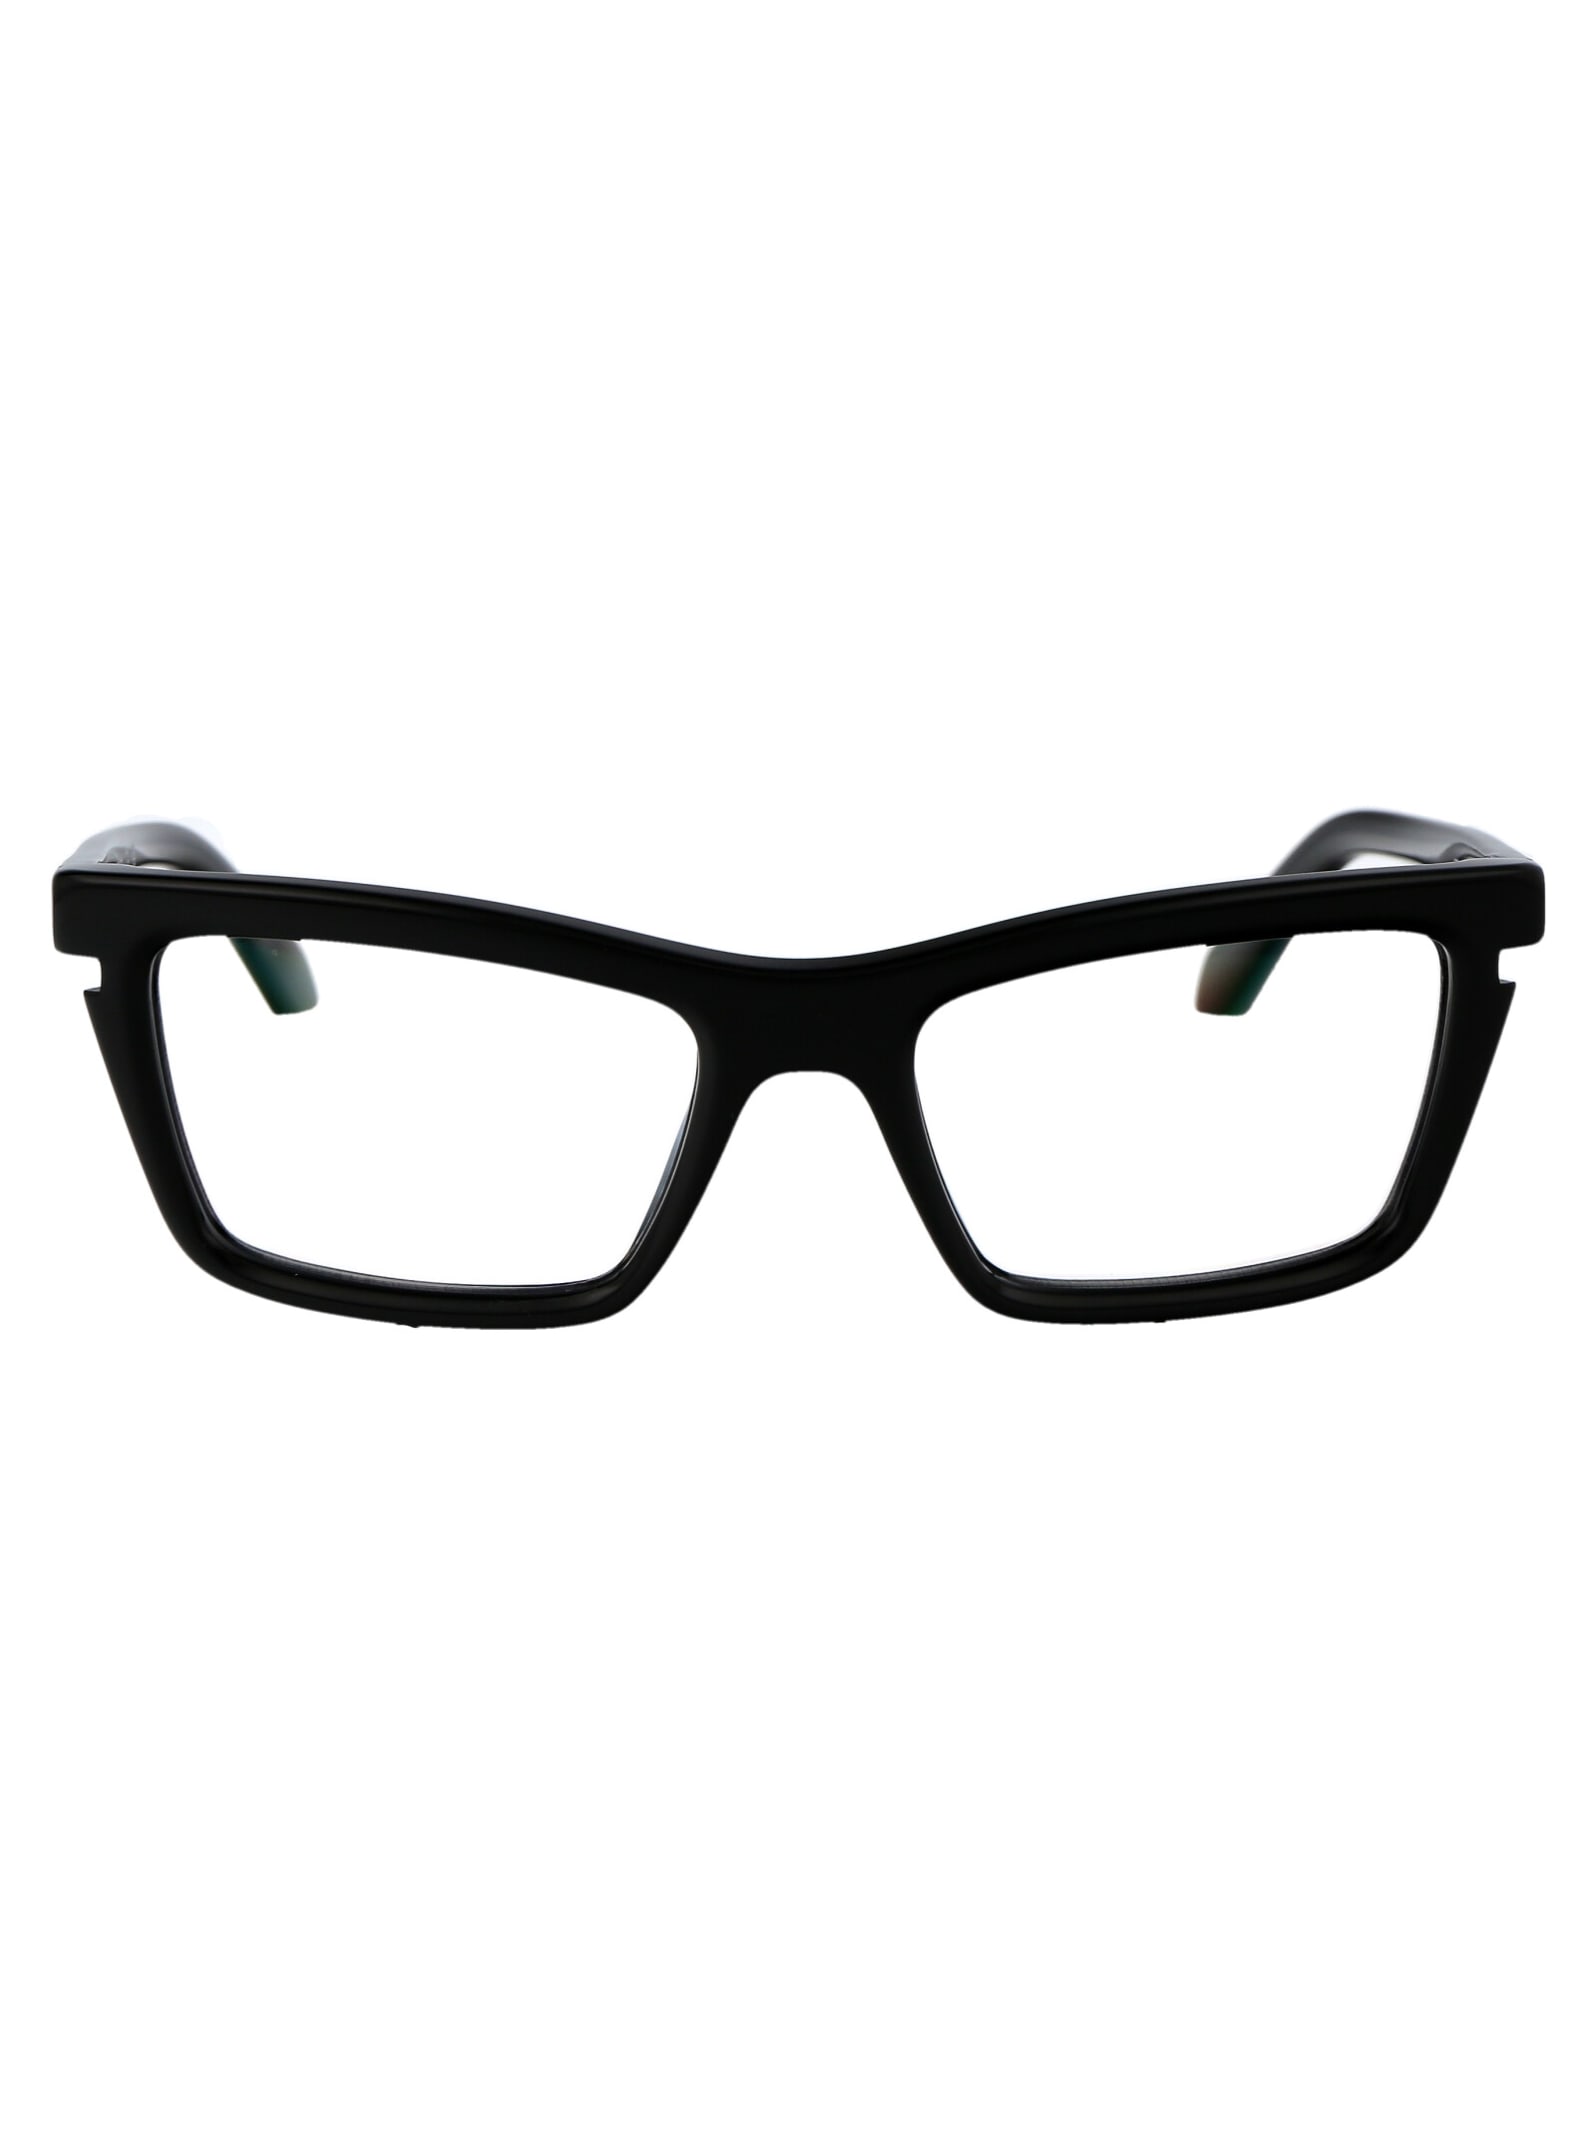 Optical Style 50 Glasses